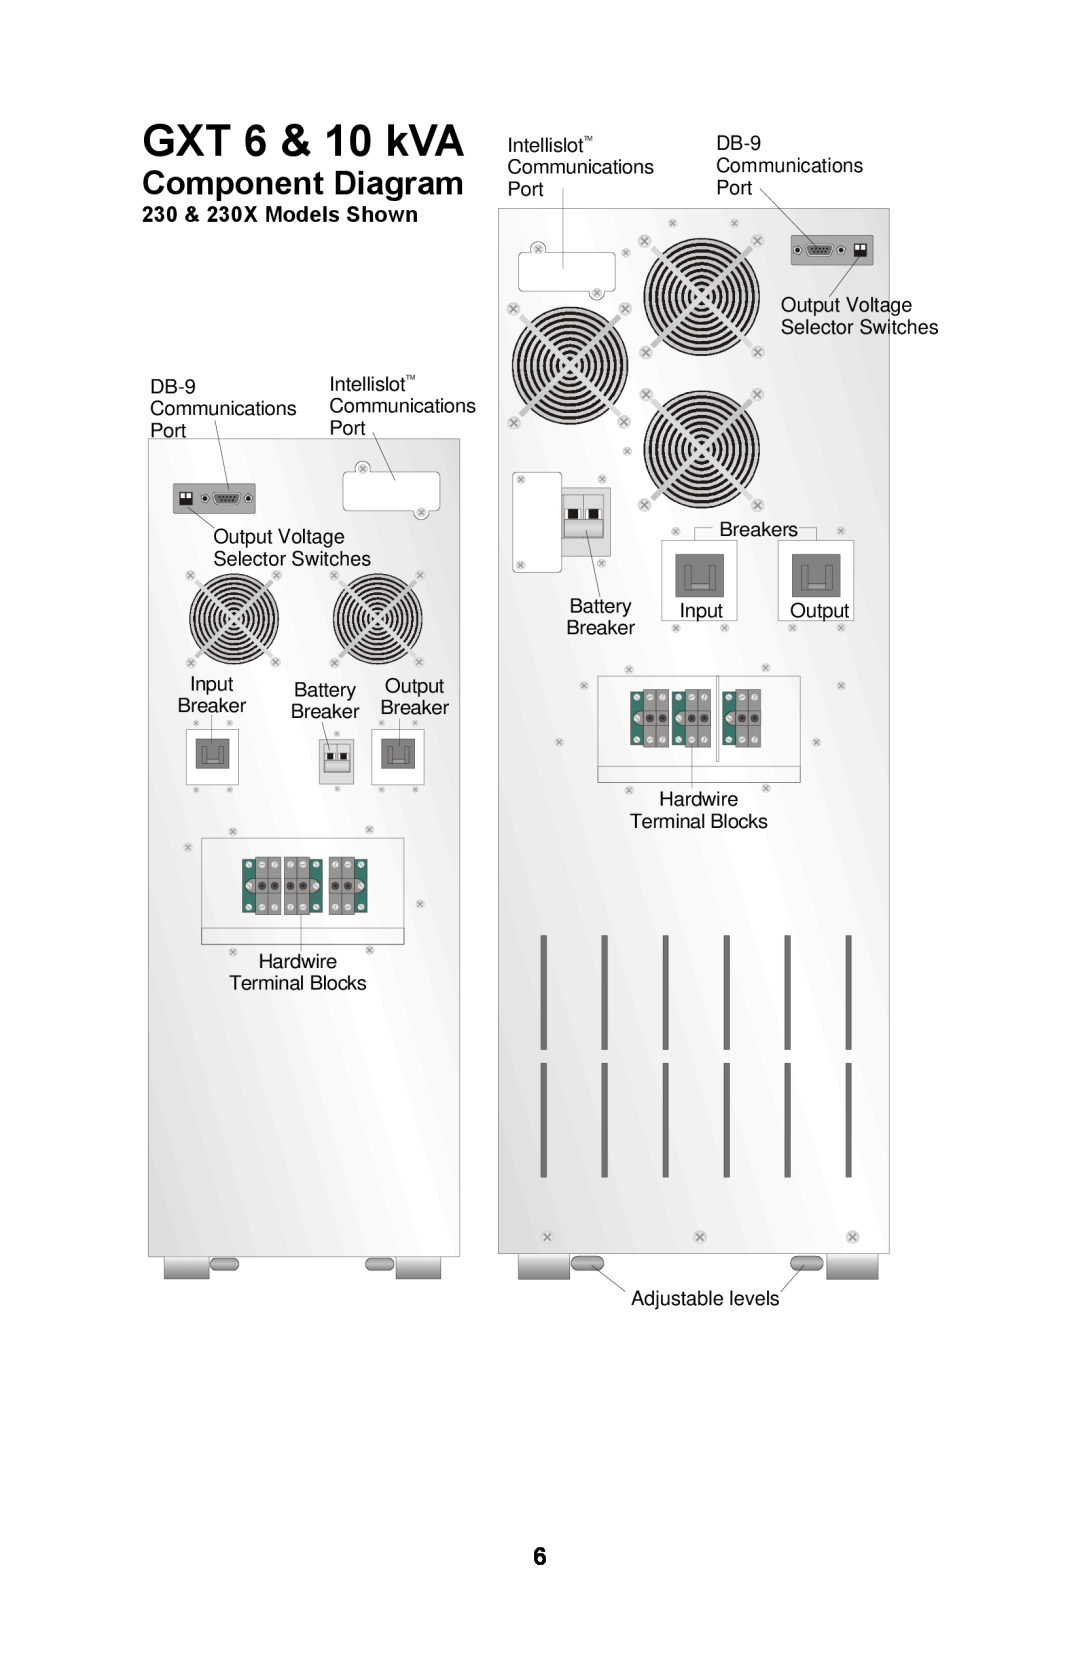 Liebert GXTTM user manual Component Diagram, GXT 6 & 10 kVA, 230 & 230X Models Shown 